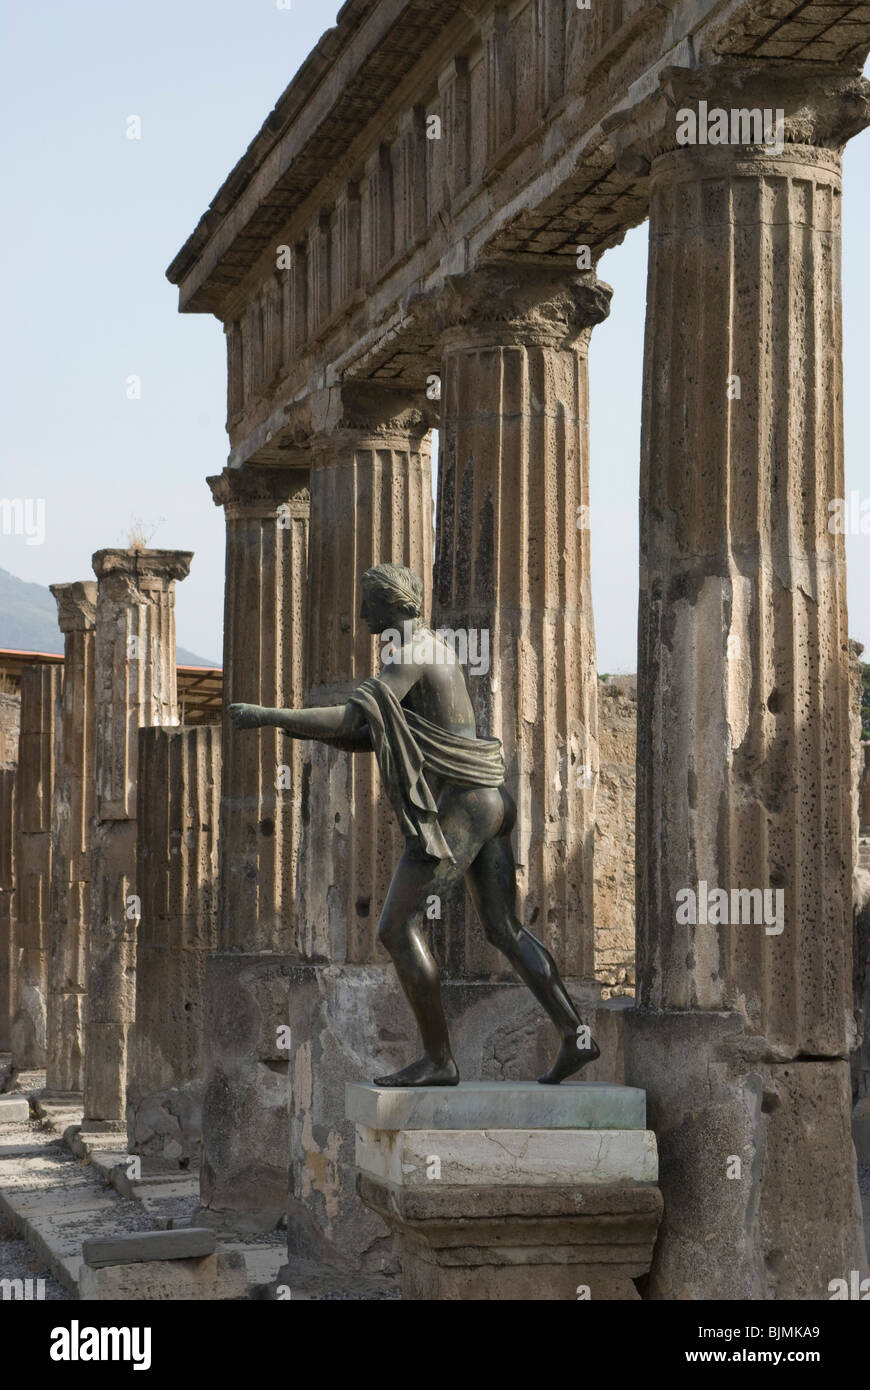 Italy, Campania, Pompeii, archaeological district, excavations of the Roman town of Pompeii, Apollo Temple, statue of Apoll Stock Photo